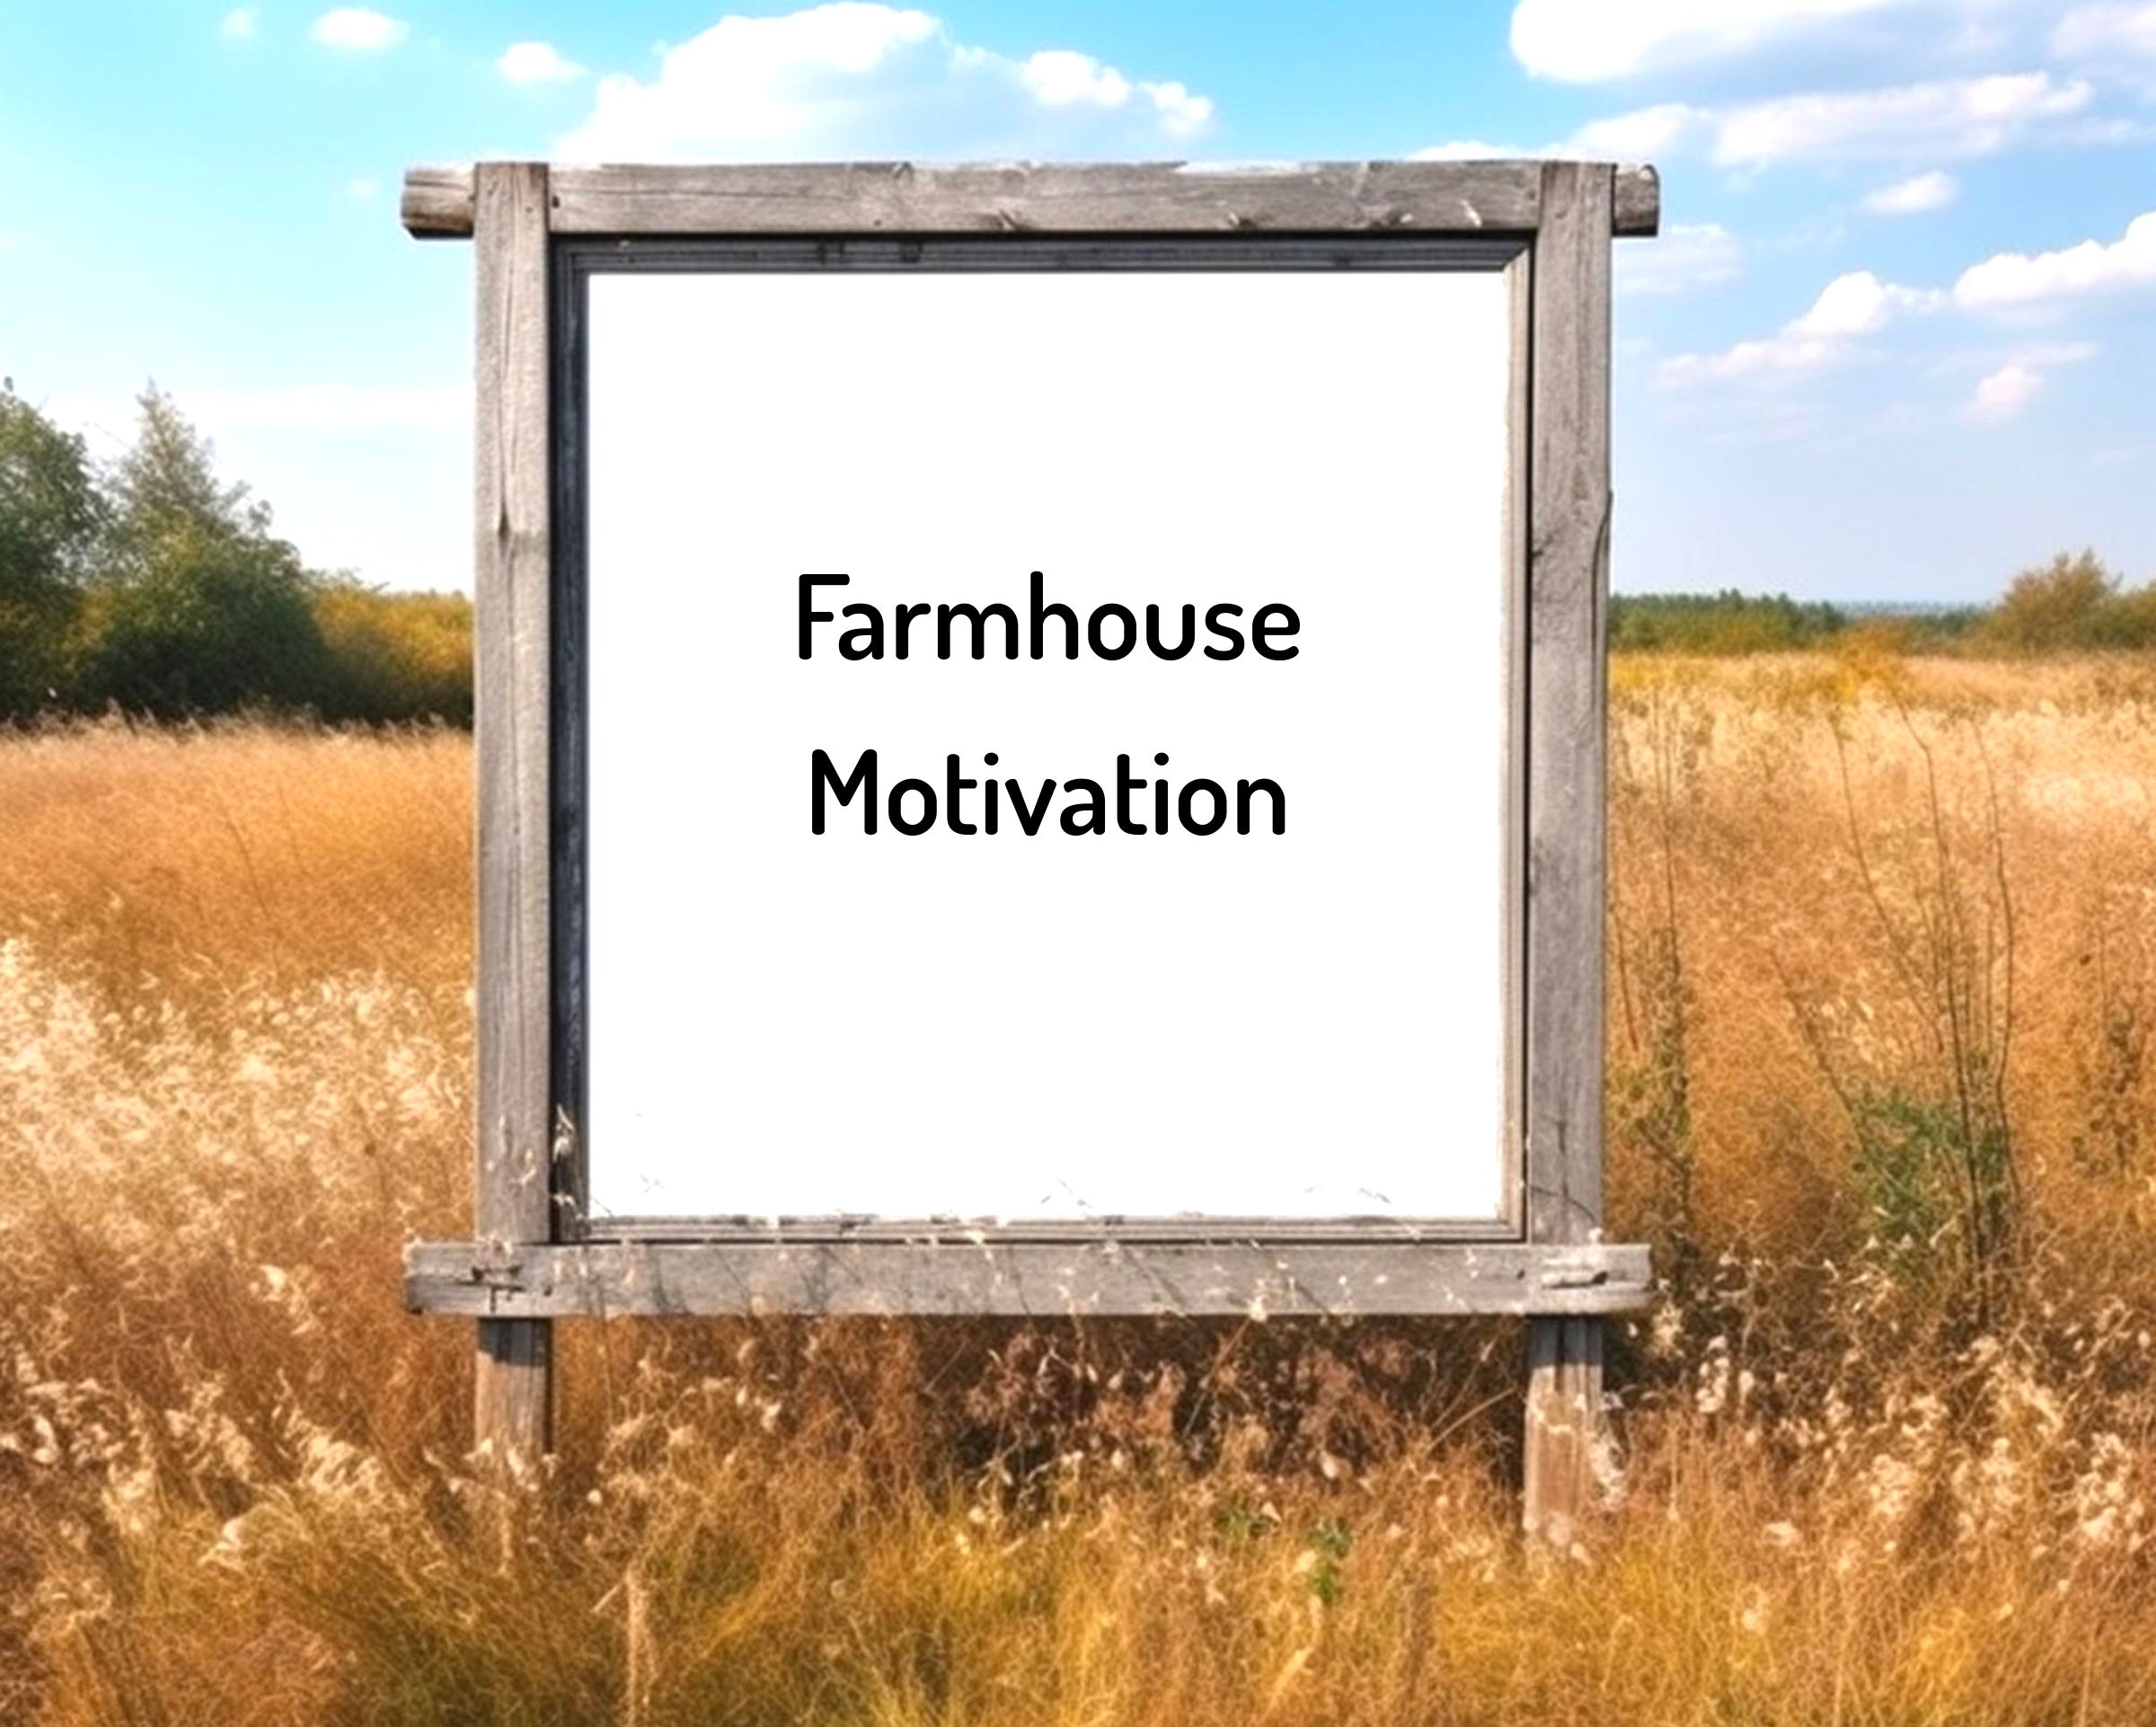 Farmhouse motivation